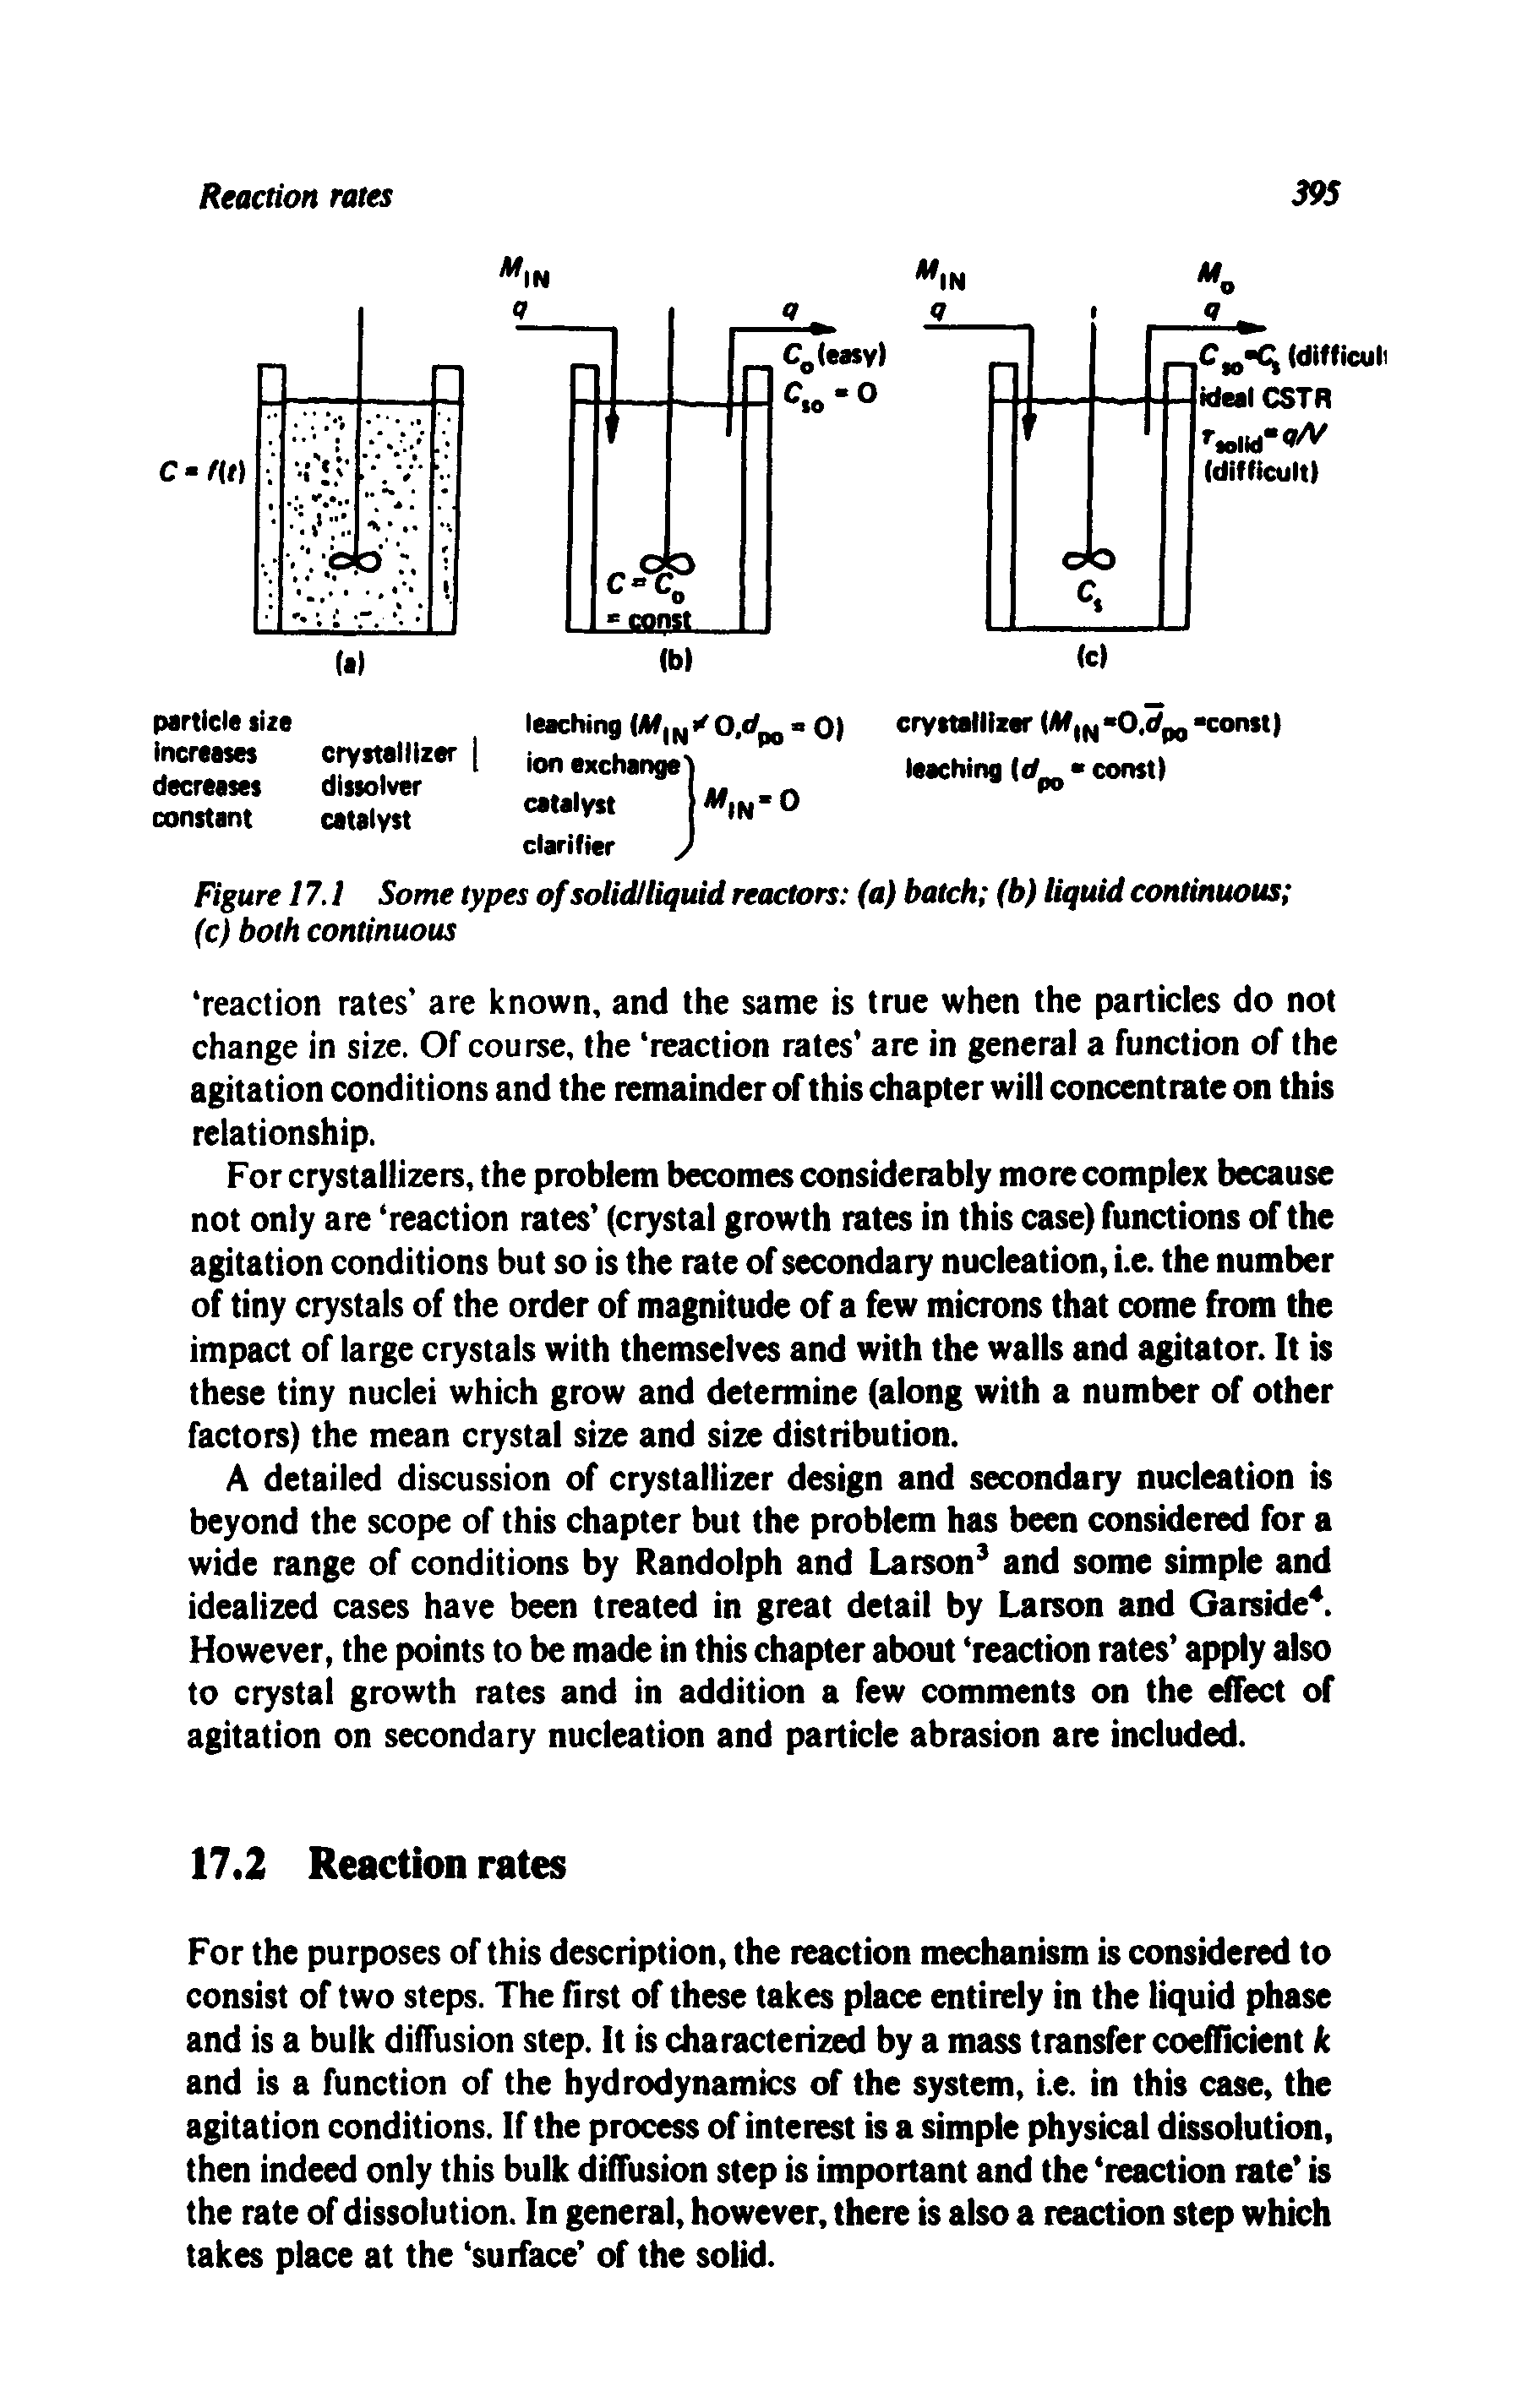 Figure 17.1 Some types of srtlid/liquid reactors (a) batch (b) Uquid continuous ...